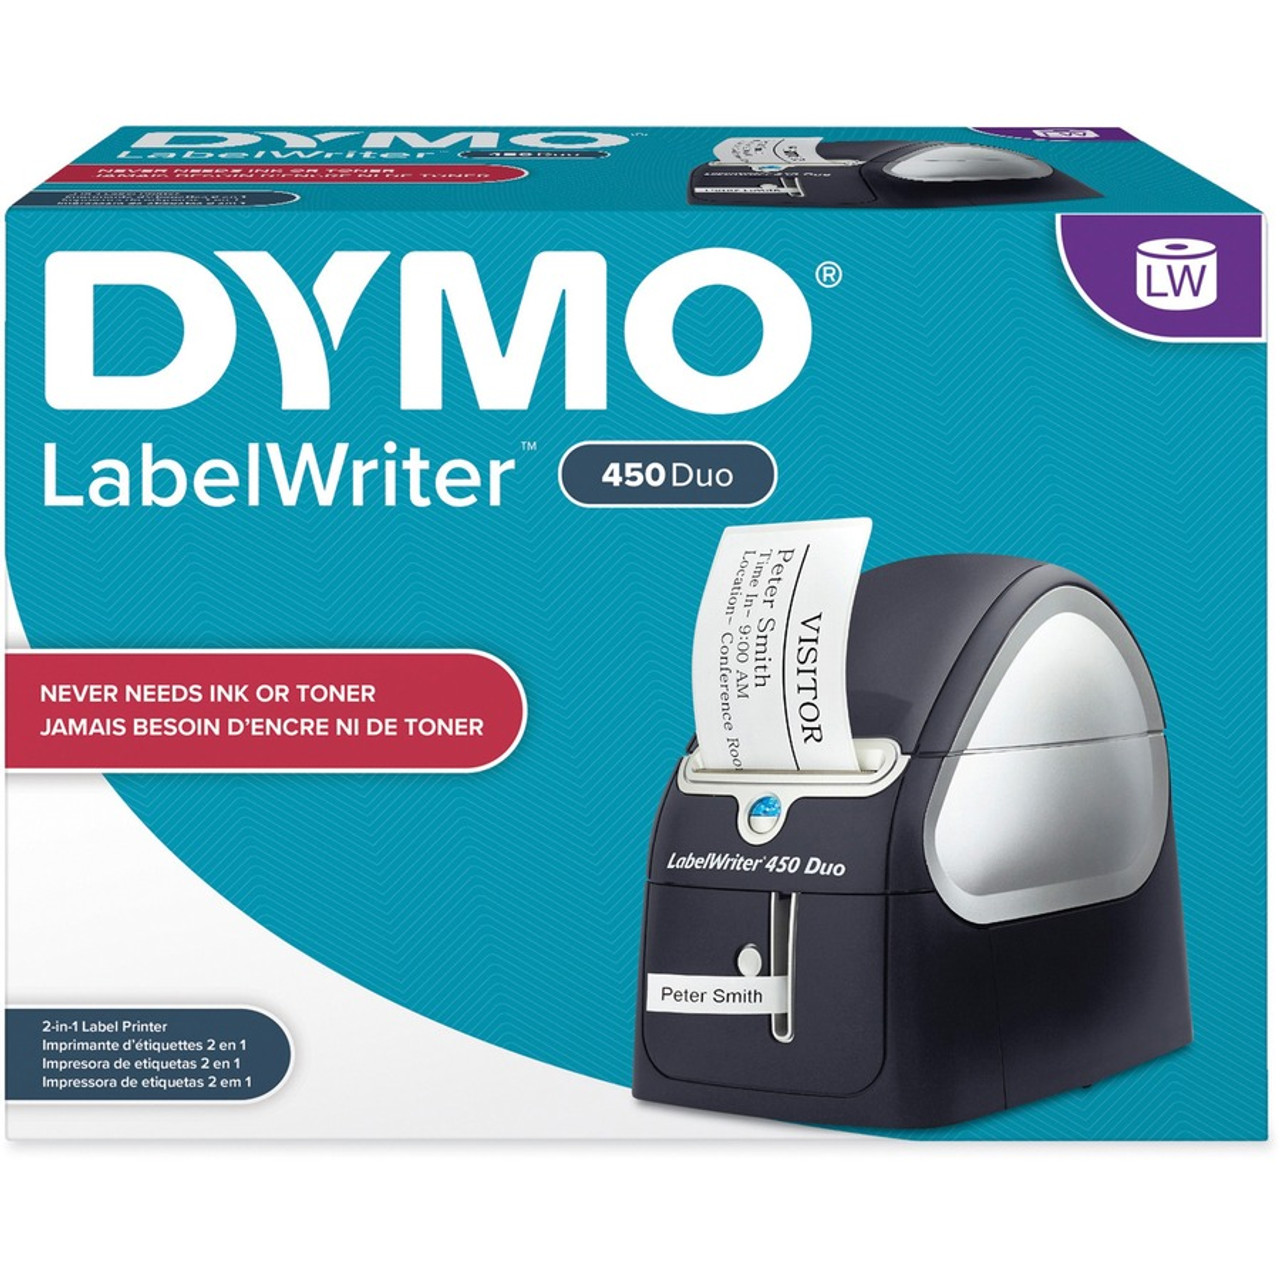 Dymo Labelwriter 450 Duo Label Printer - Monochrome 